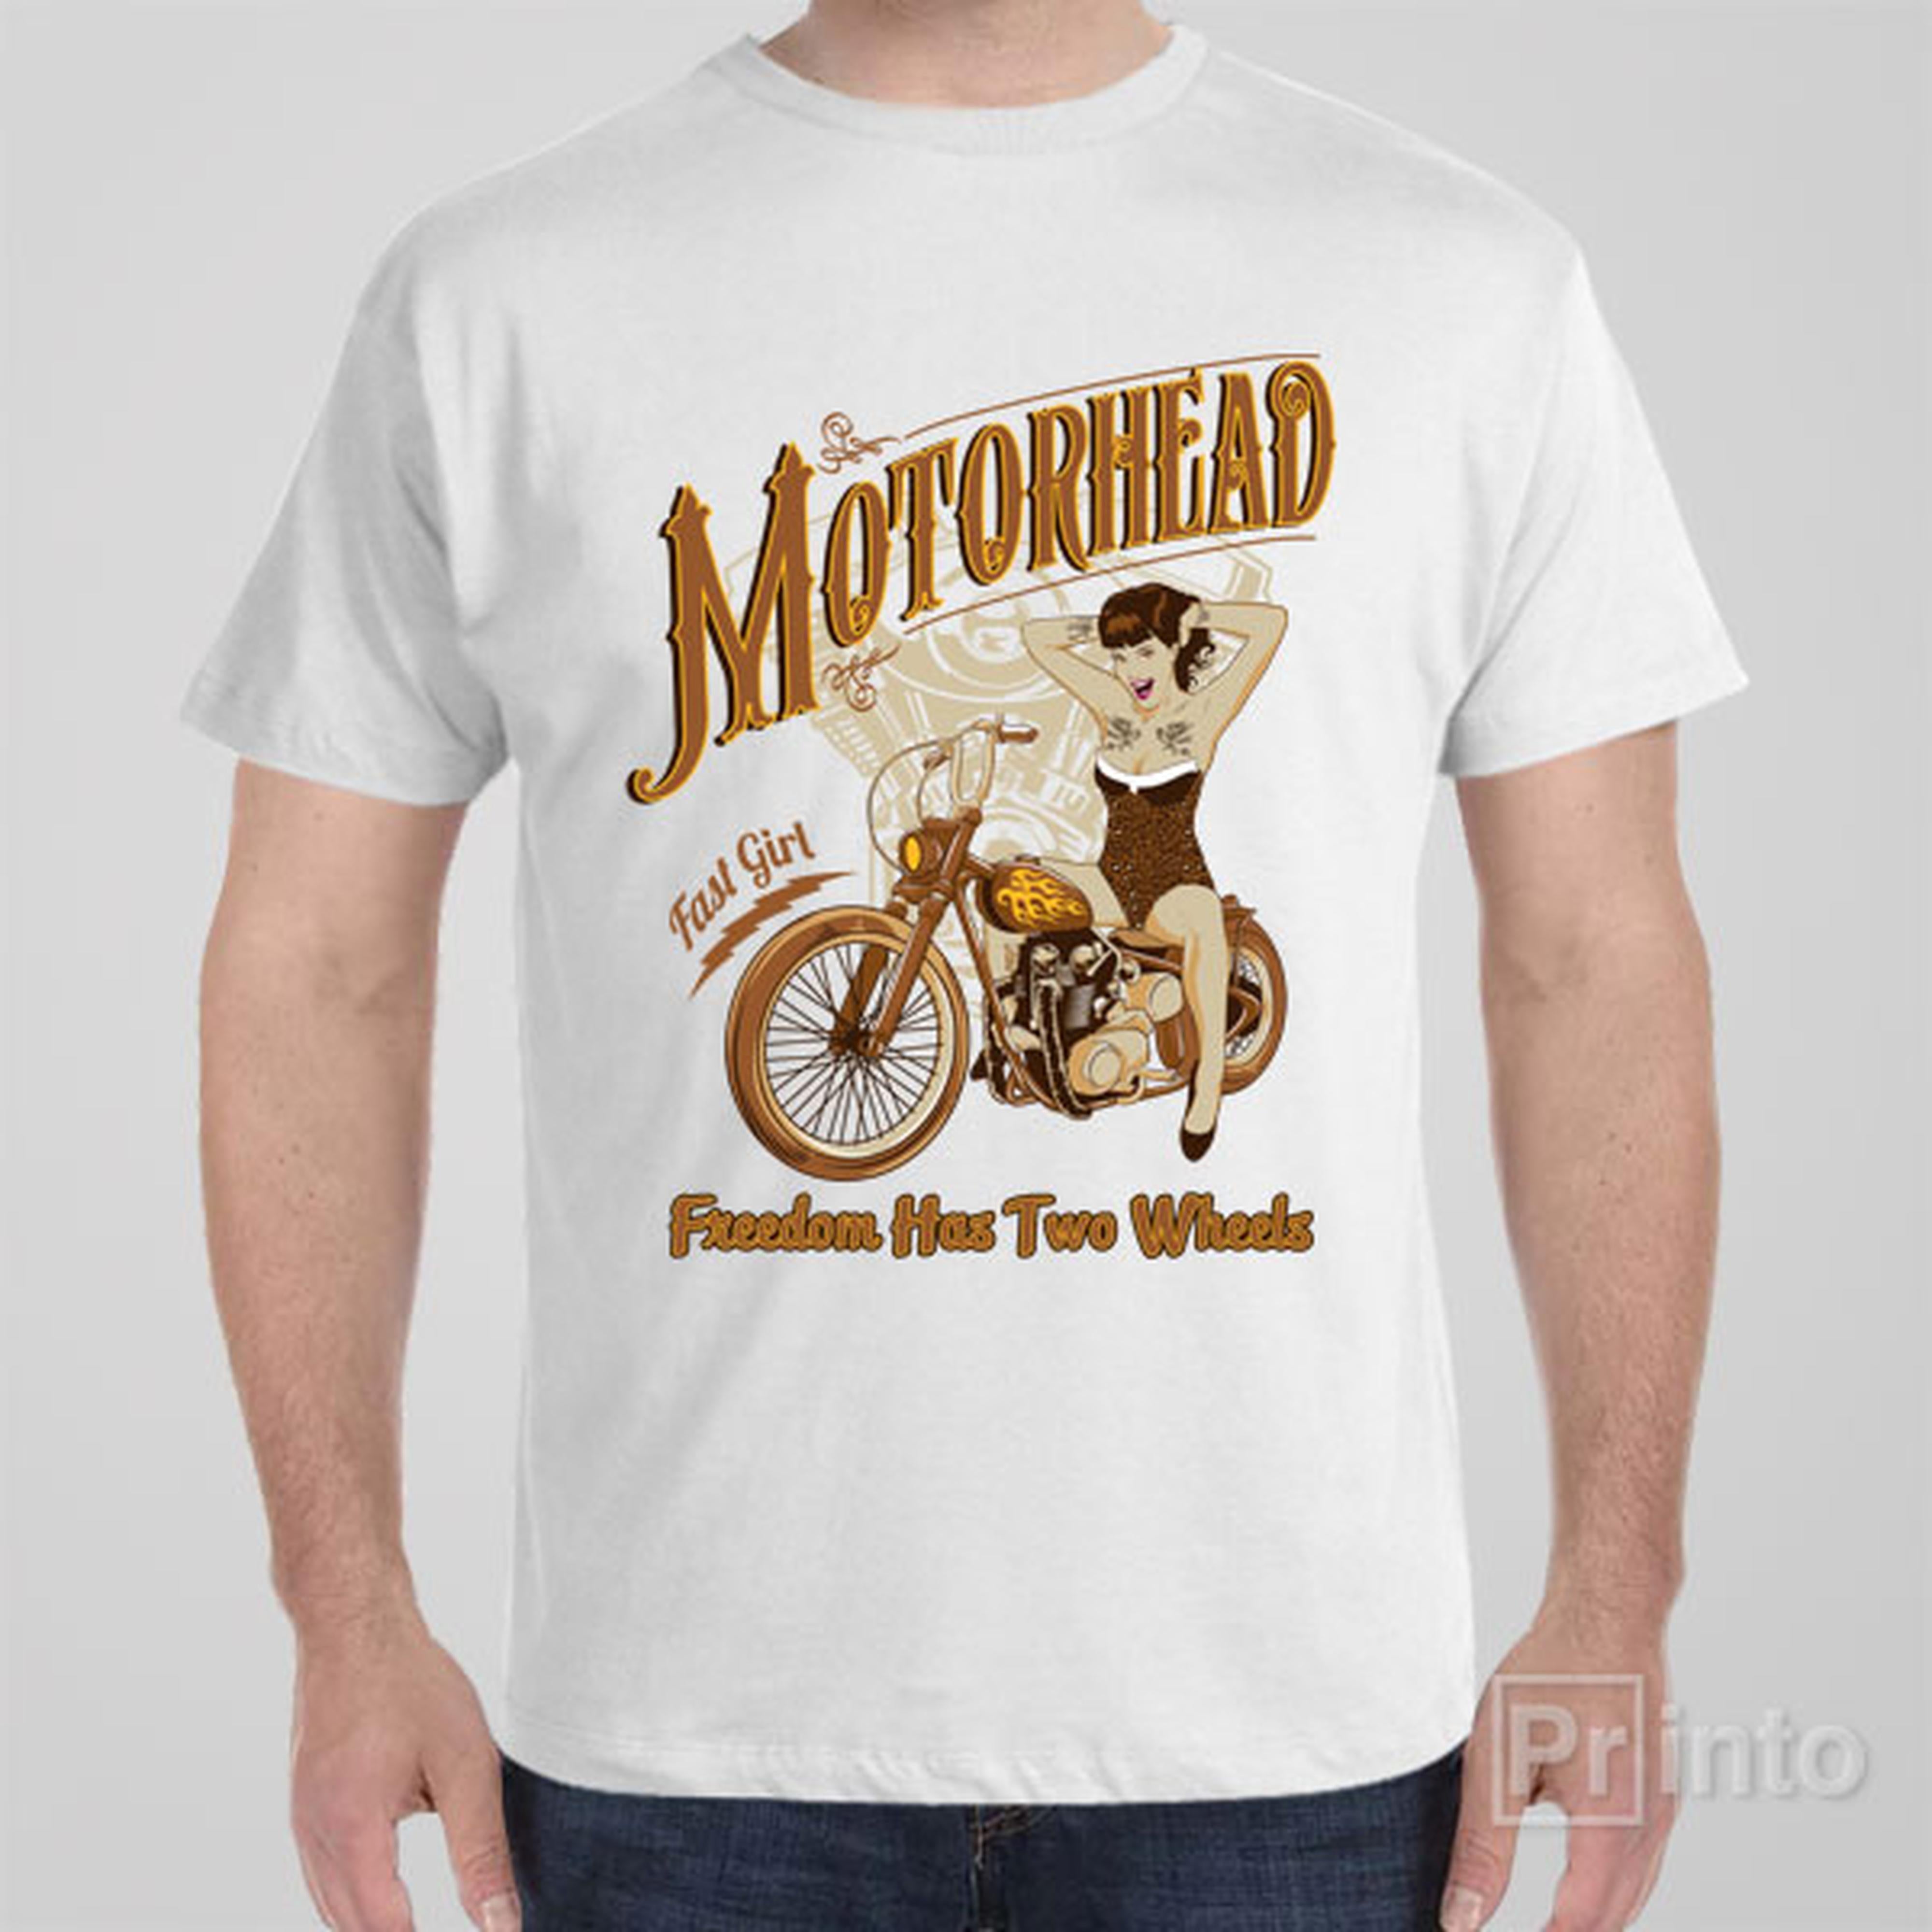 motorhead-t-shirt